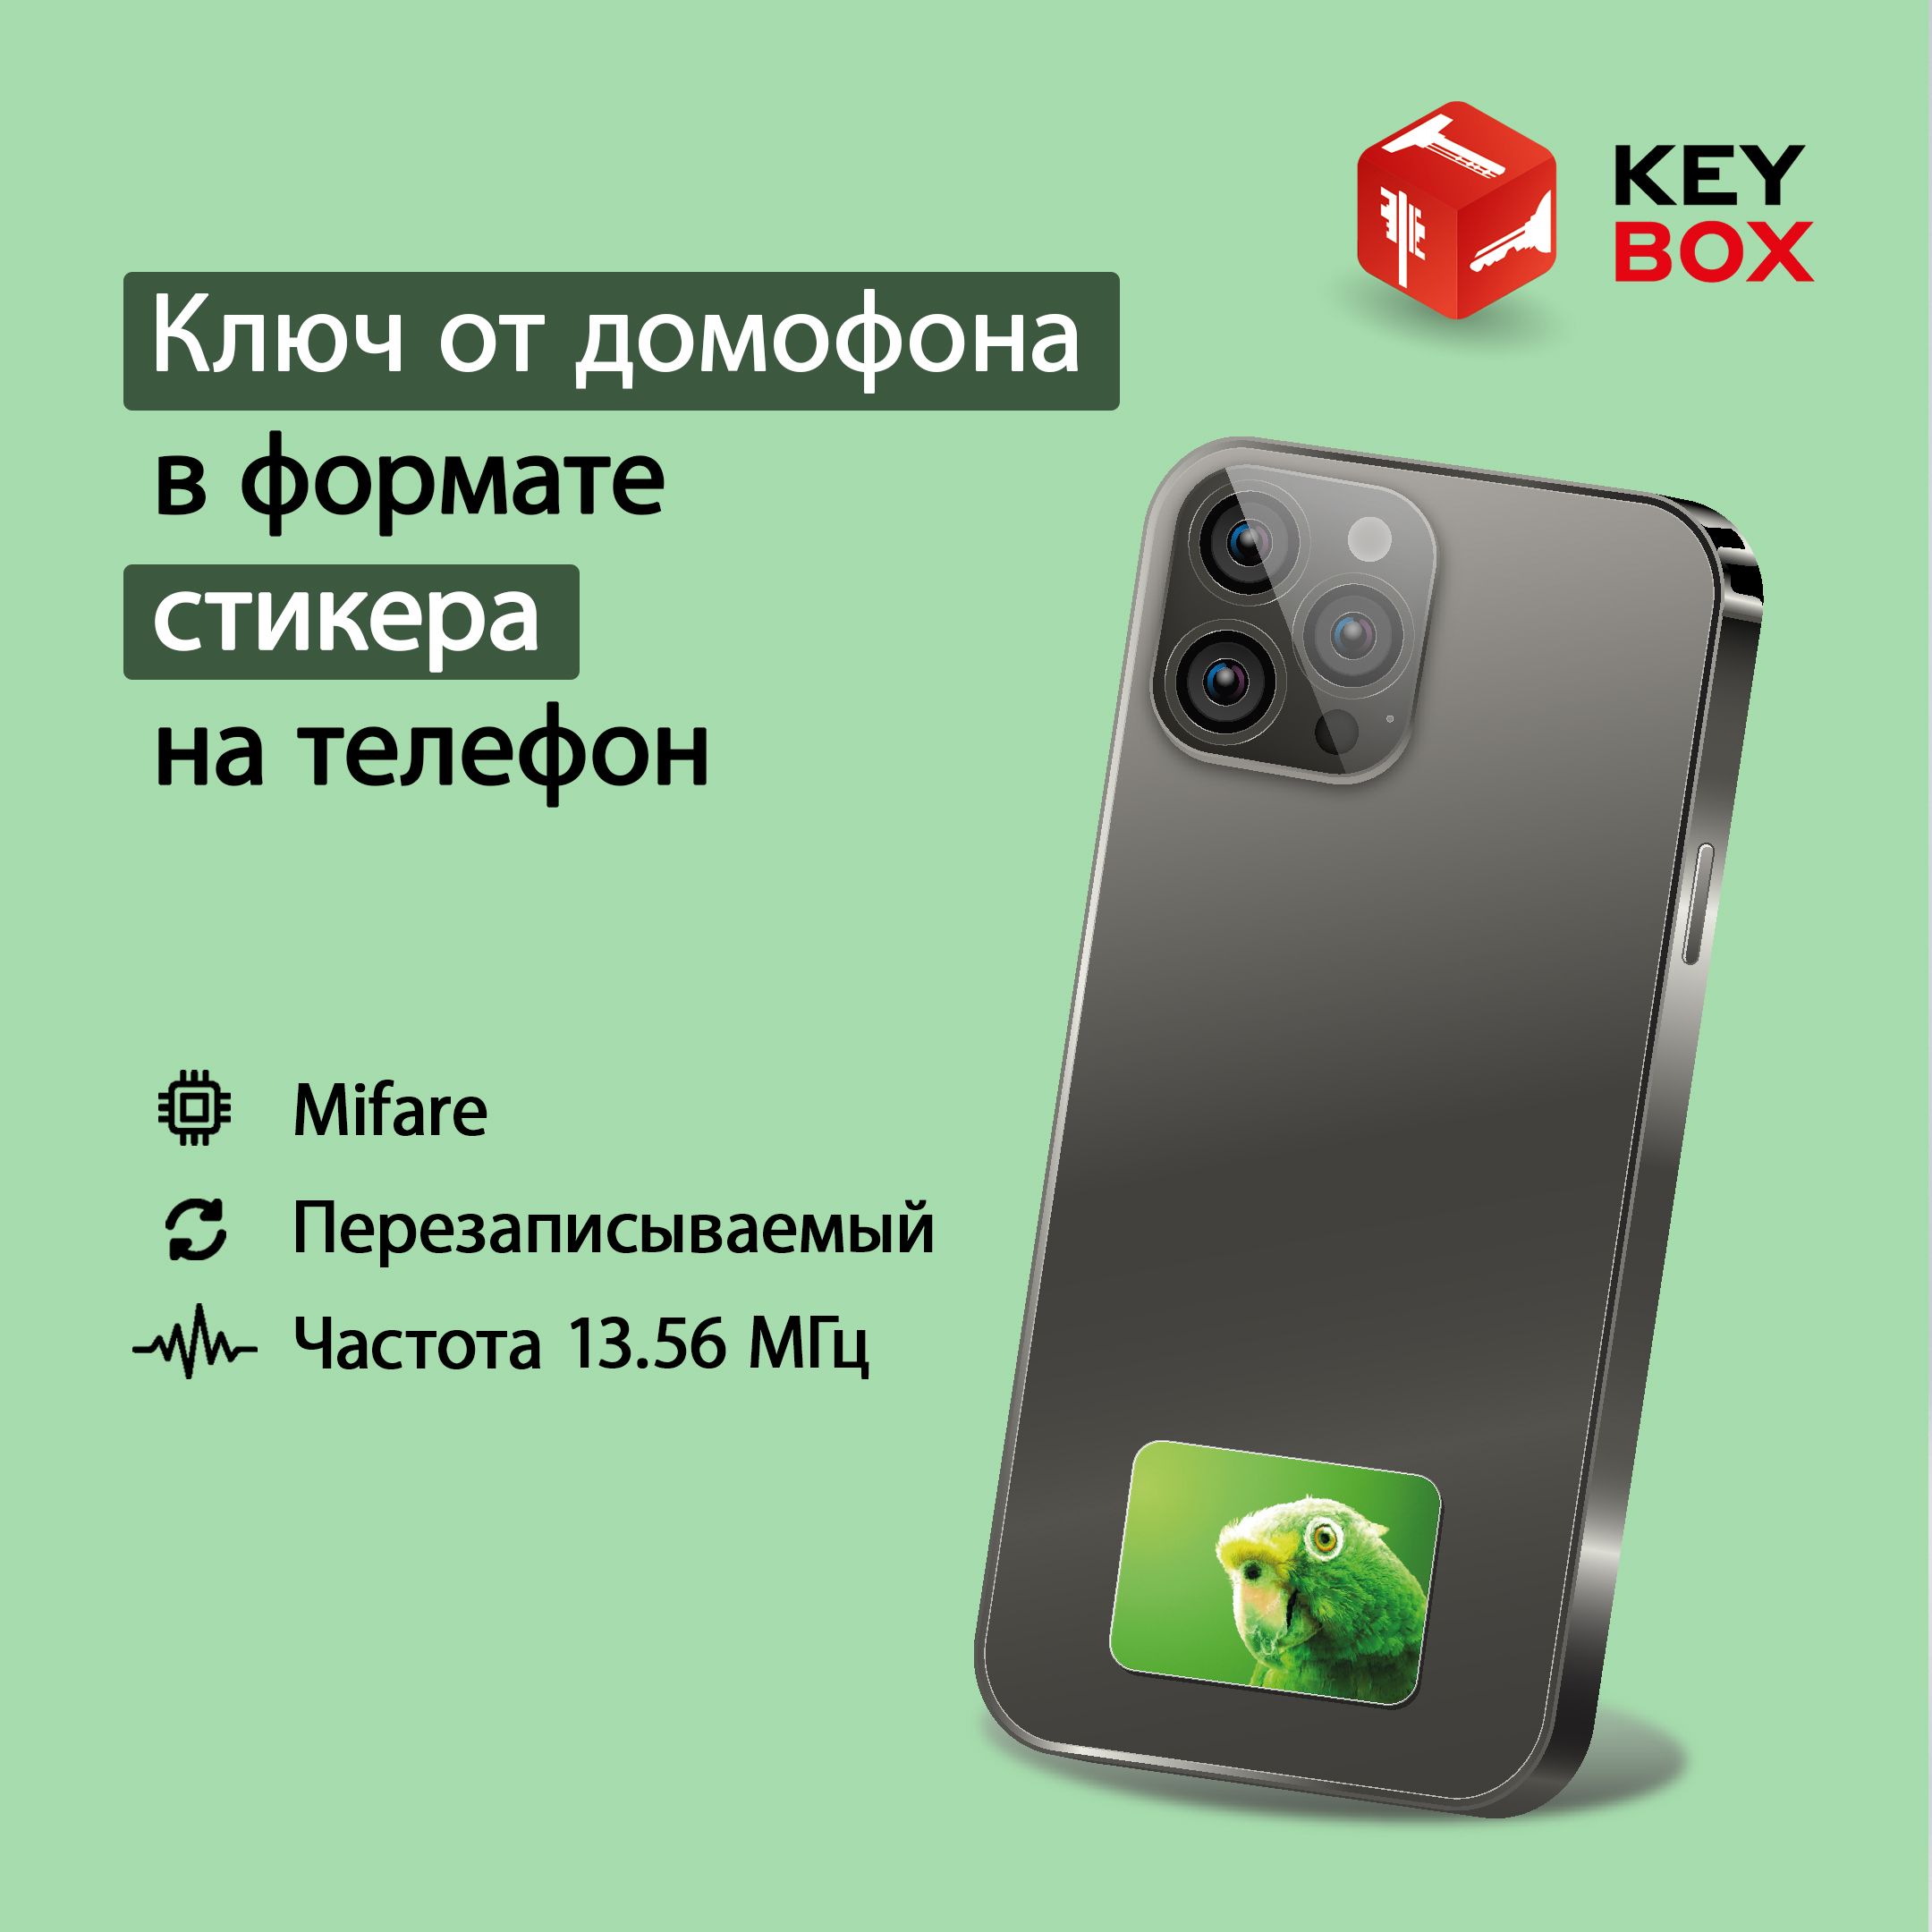 sip телефон fanvil x7 с б п Ключ-стикер для домофона на телефон Keybox Mifare St011, Попугай